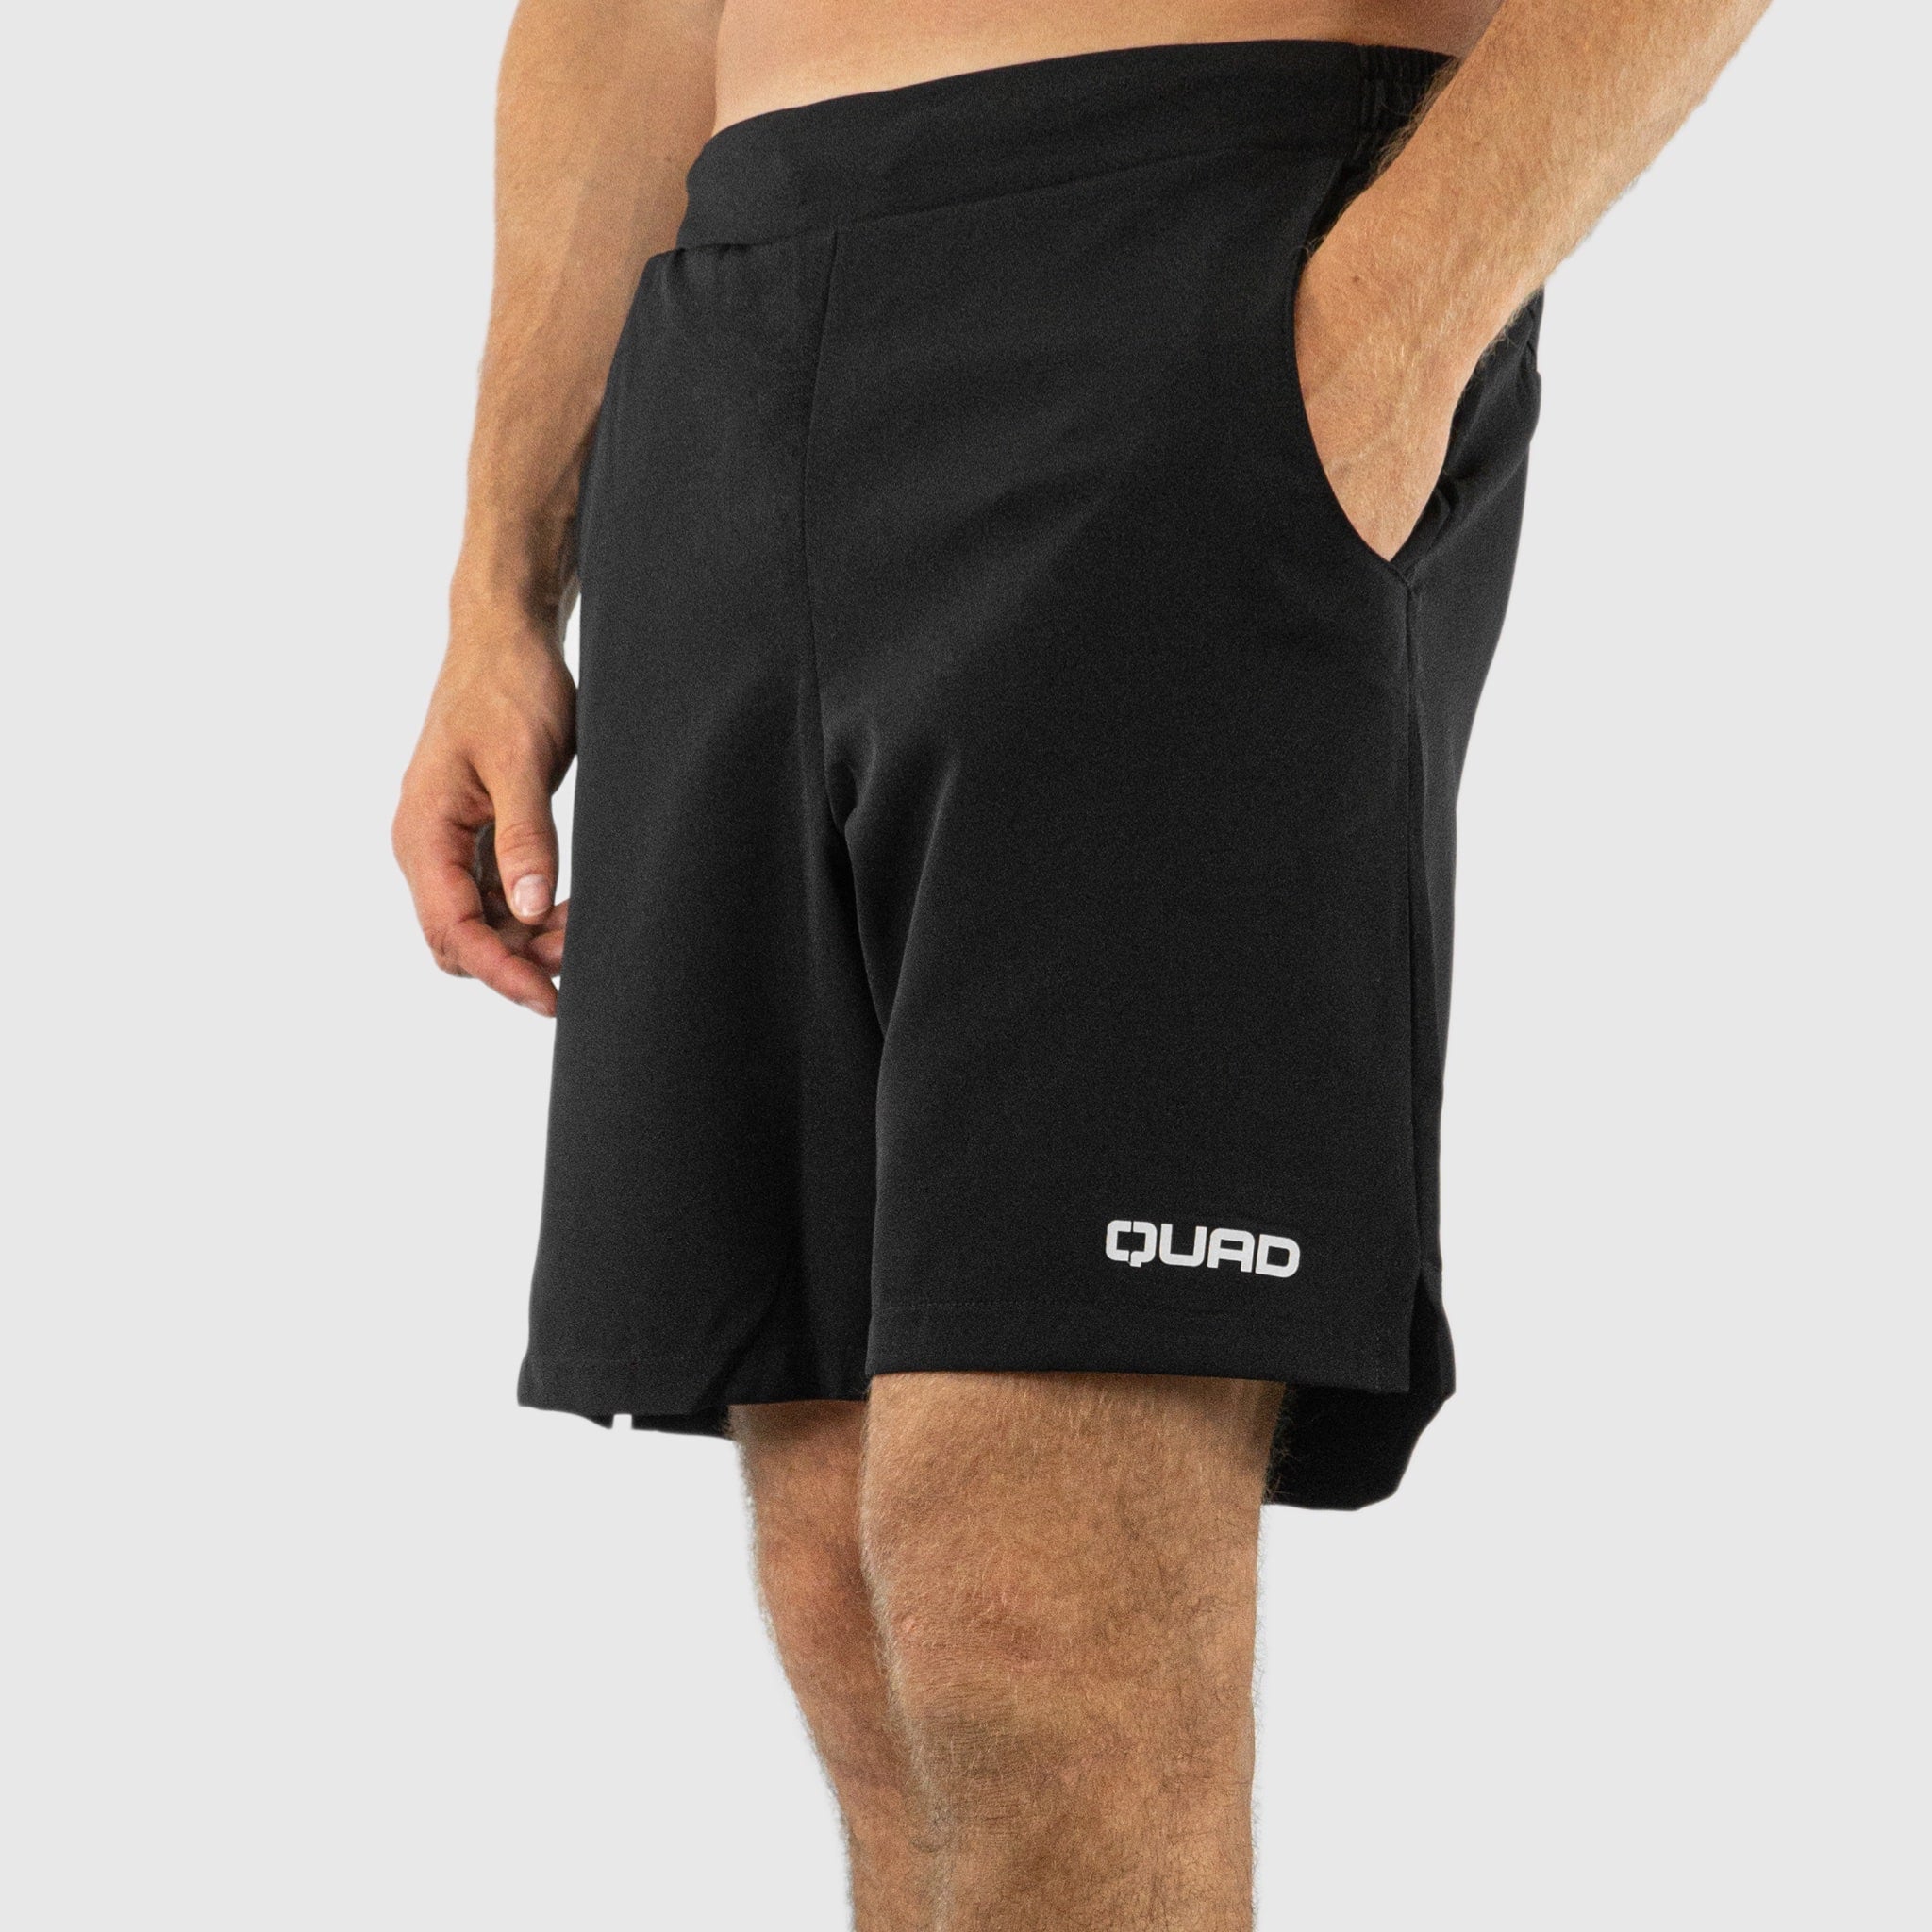 Quad Padel Court shorts black side view